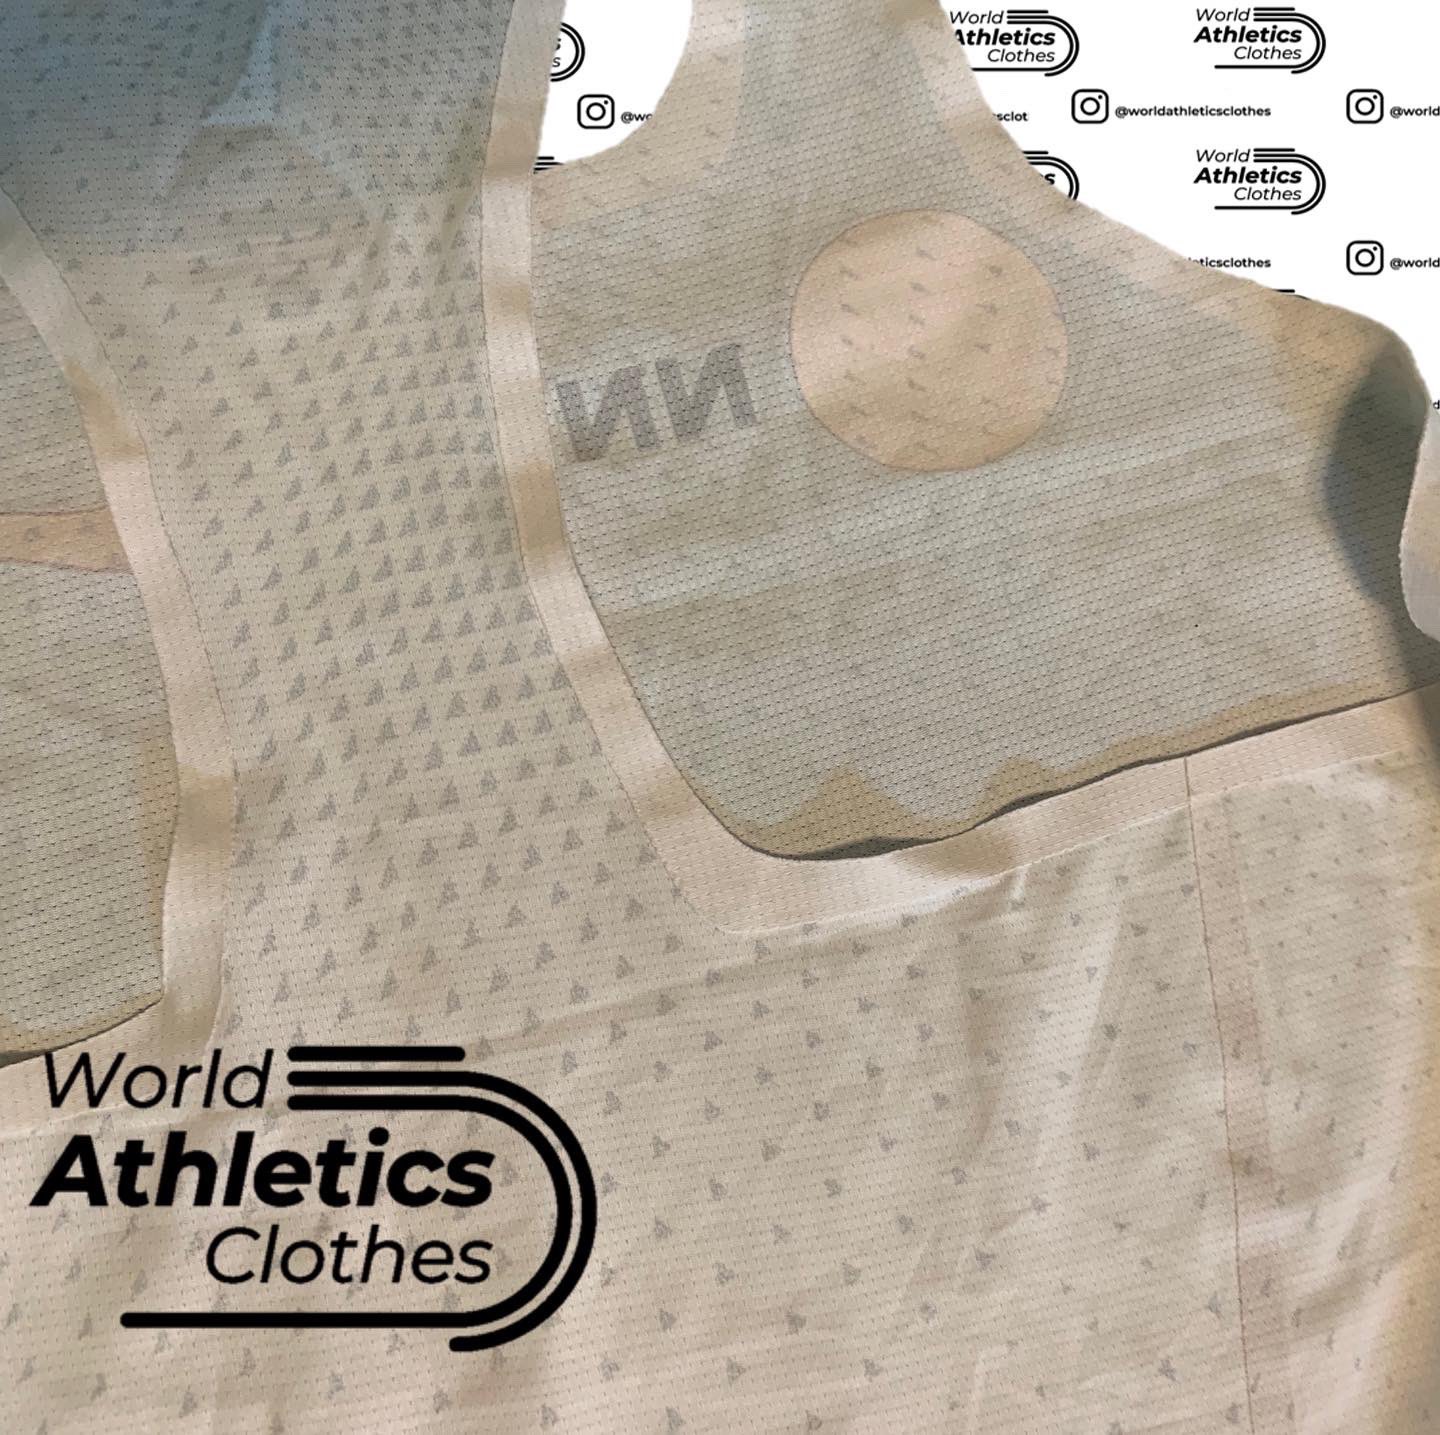 World Athletics Clothes on X: 